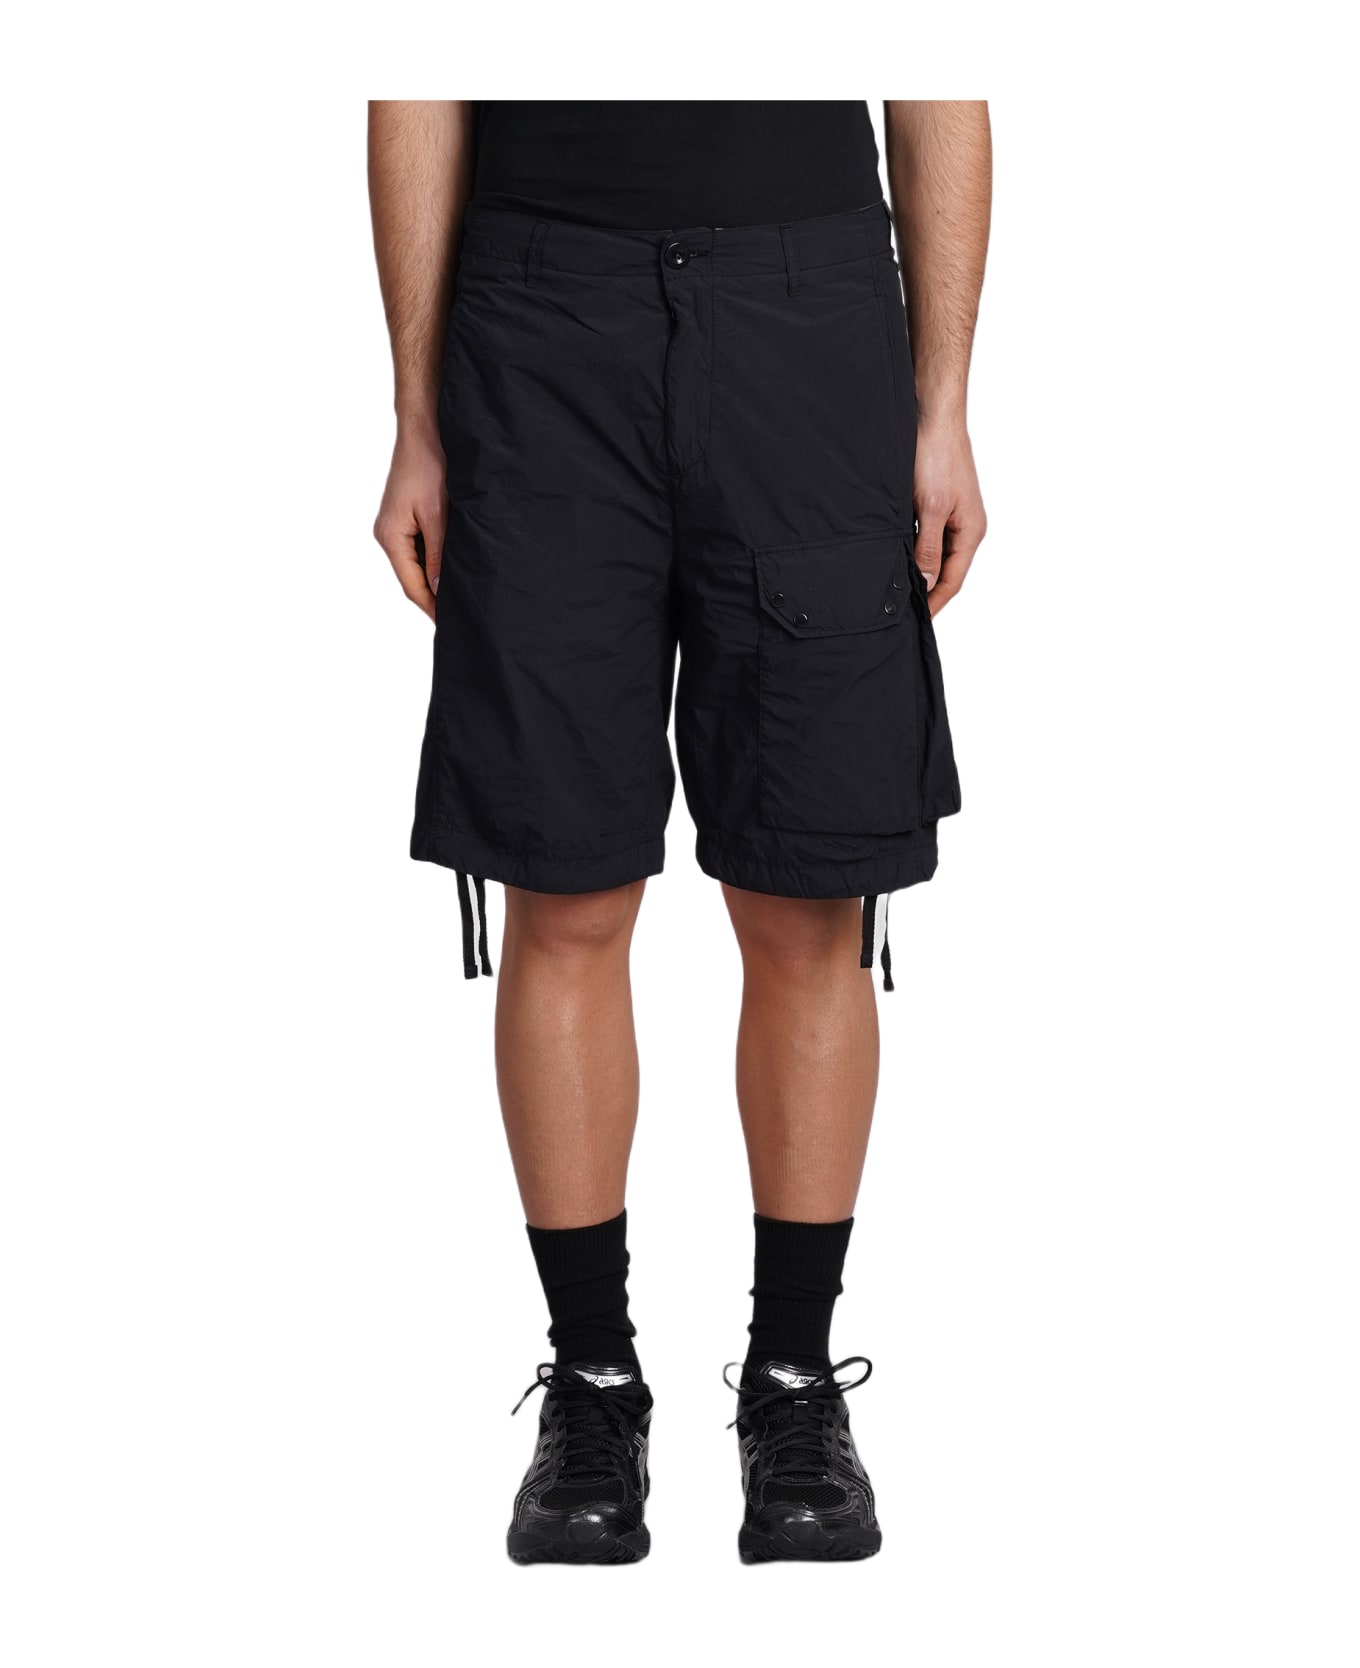 Ten C Shorts In Black Polyester - black